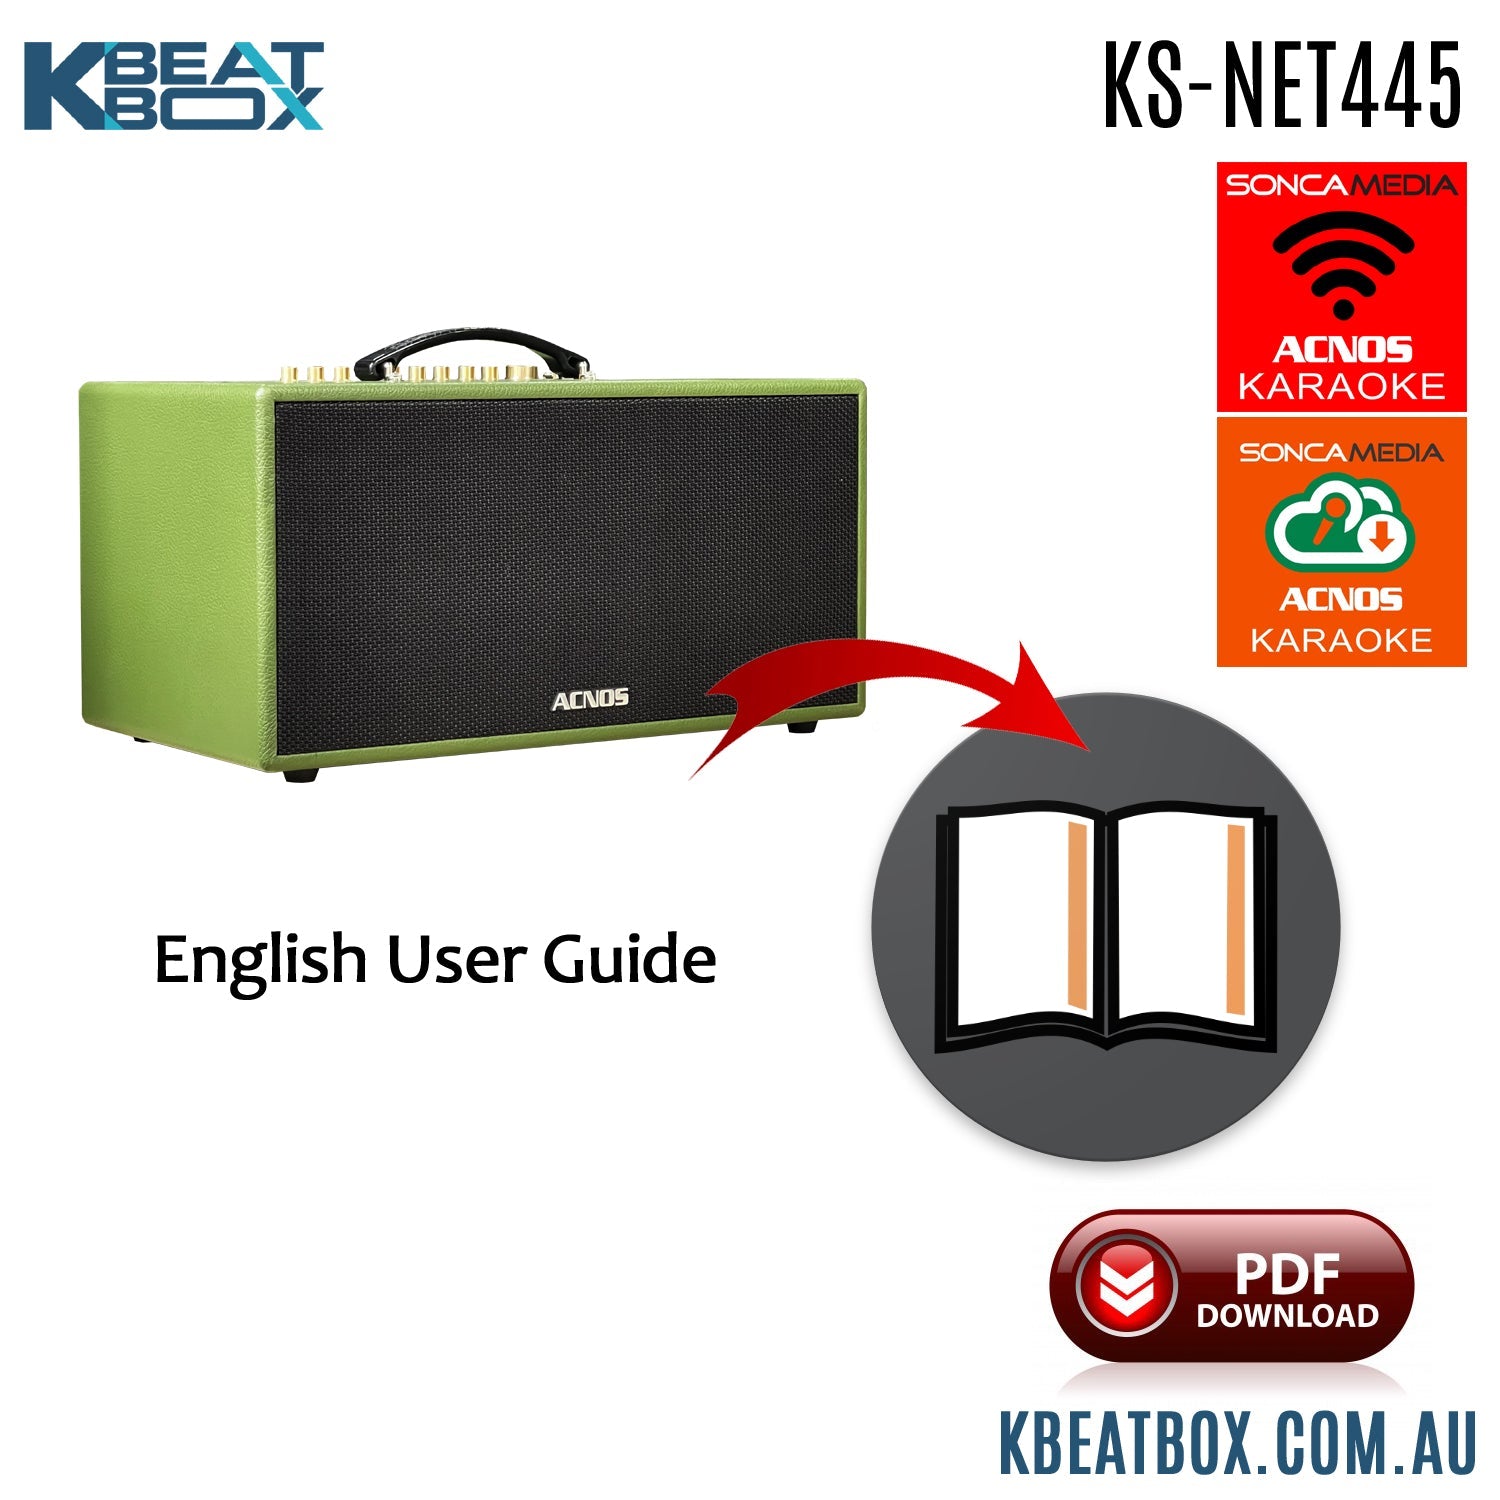 How To Connect Guide - KBeatBox KS-NET445 - Karaoke Home Entertainment